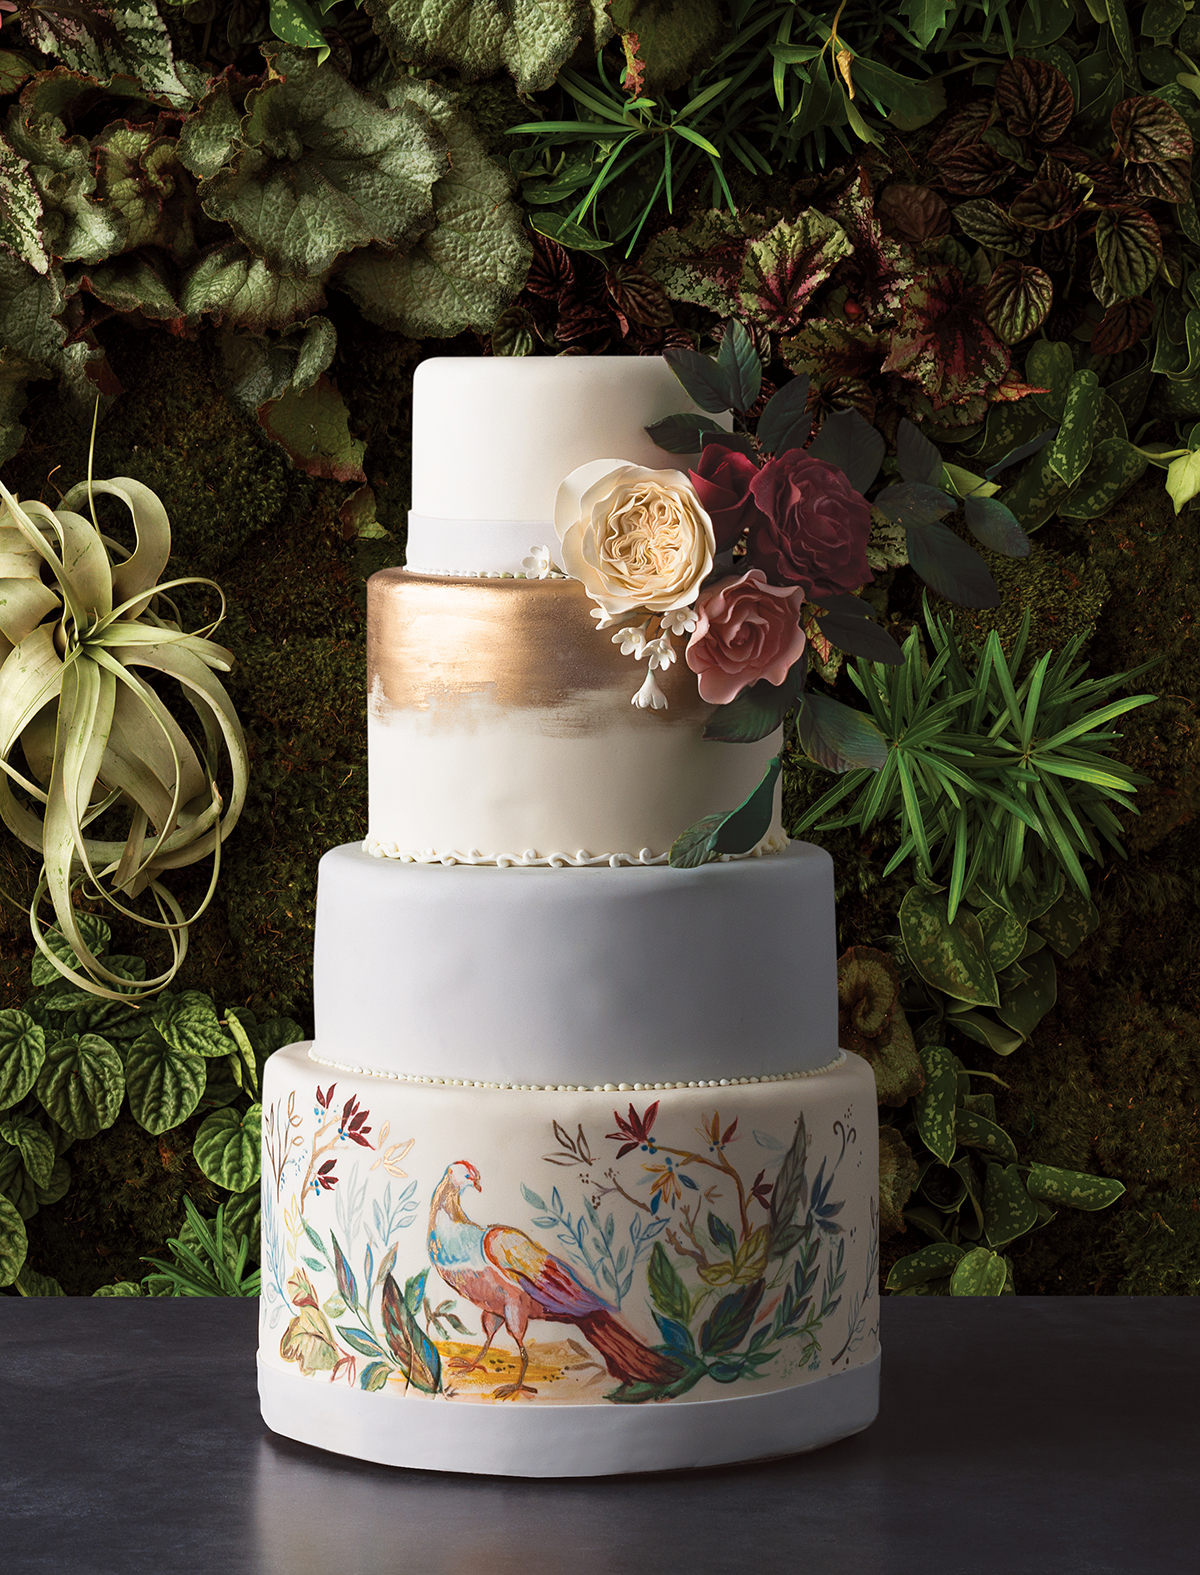 Flour Power: Four Wedding Cake and Flower Pairings